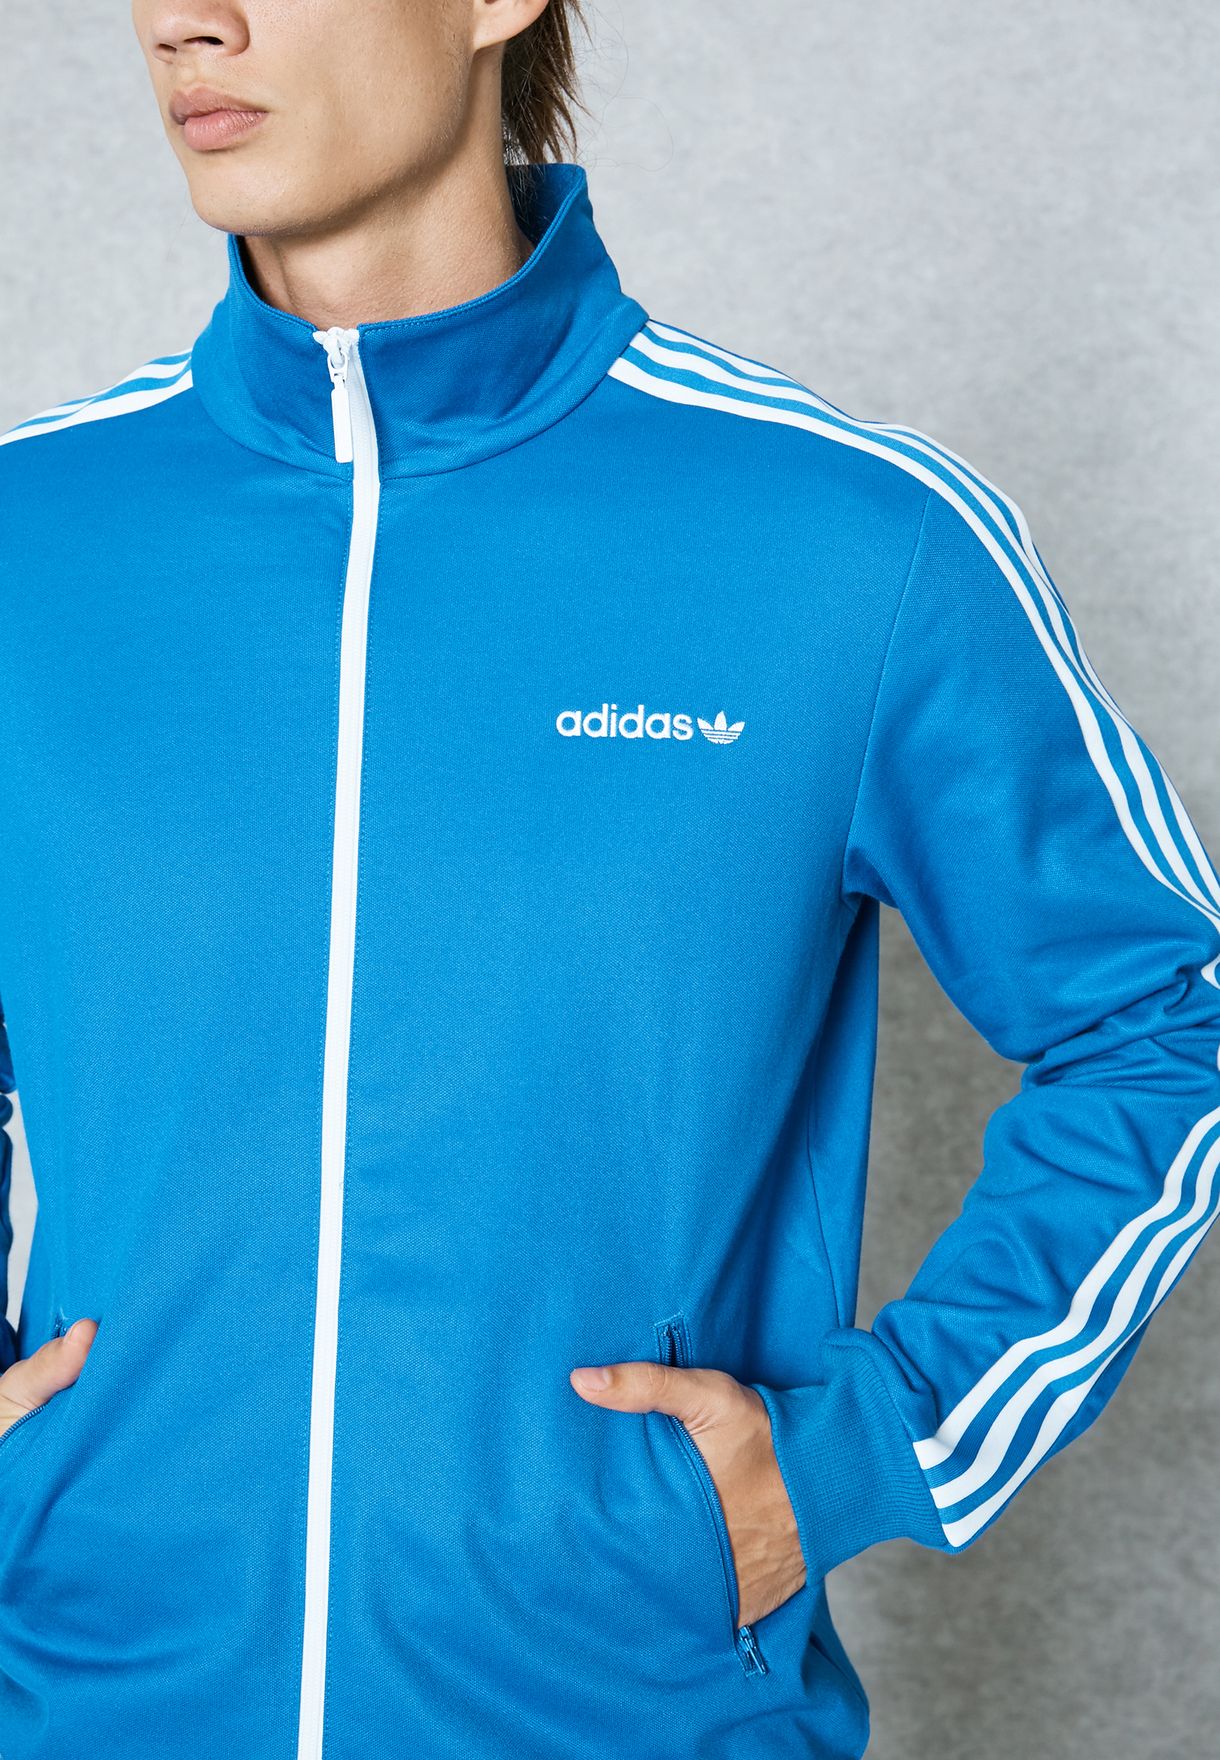 adidas bb track jacket blue